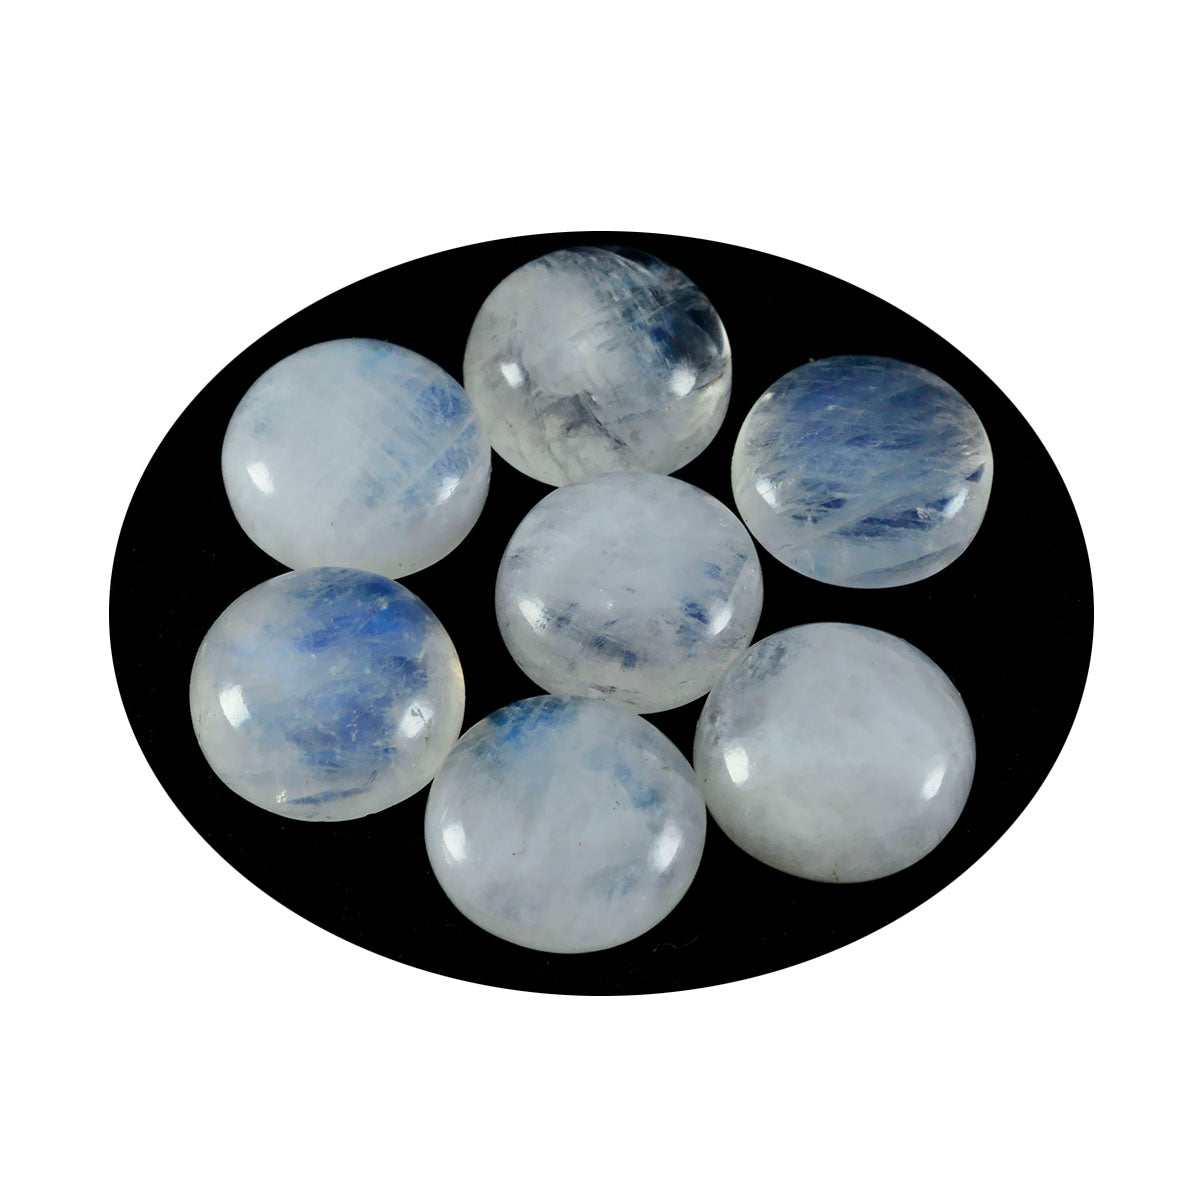 riyogems 1 шт., белый радужный лунный камень, кабошон 14x14 мм, круглая форма, красивый качественный драгоценный камень